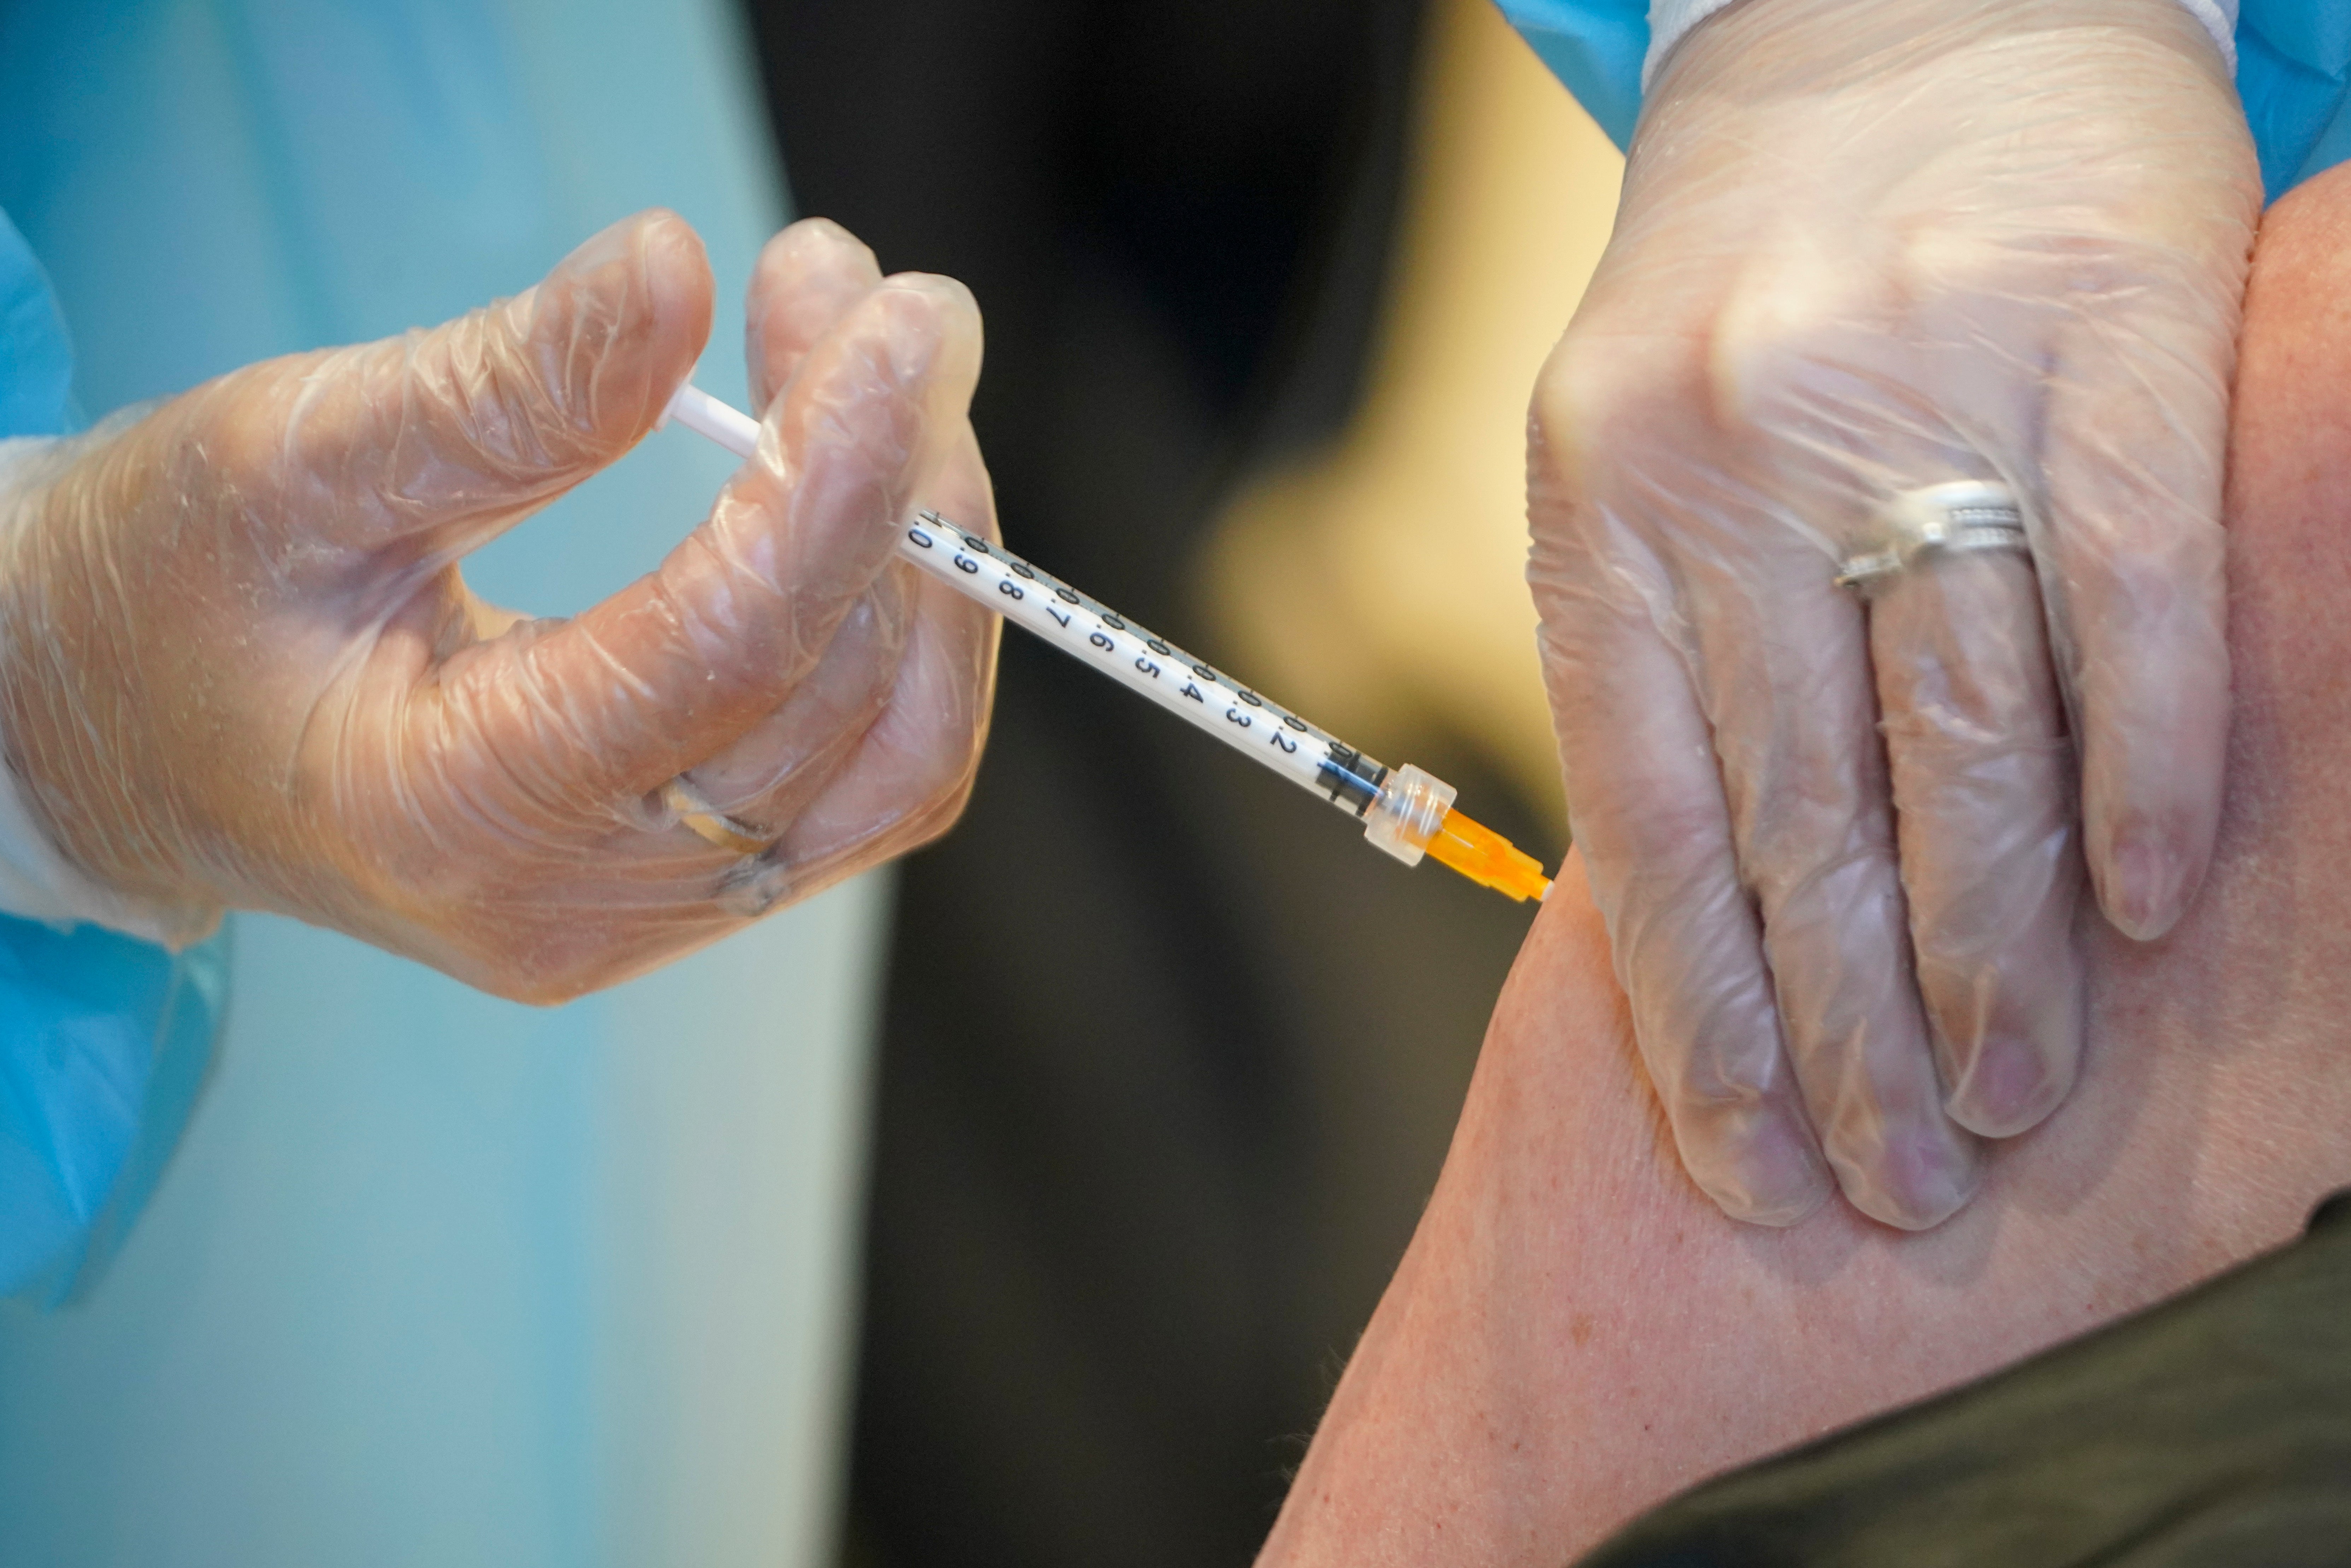 Ireland’s youngest country to suspend AstraZeneca COVID-19 vaccine